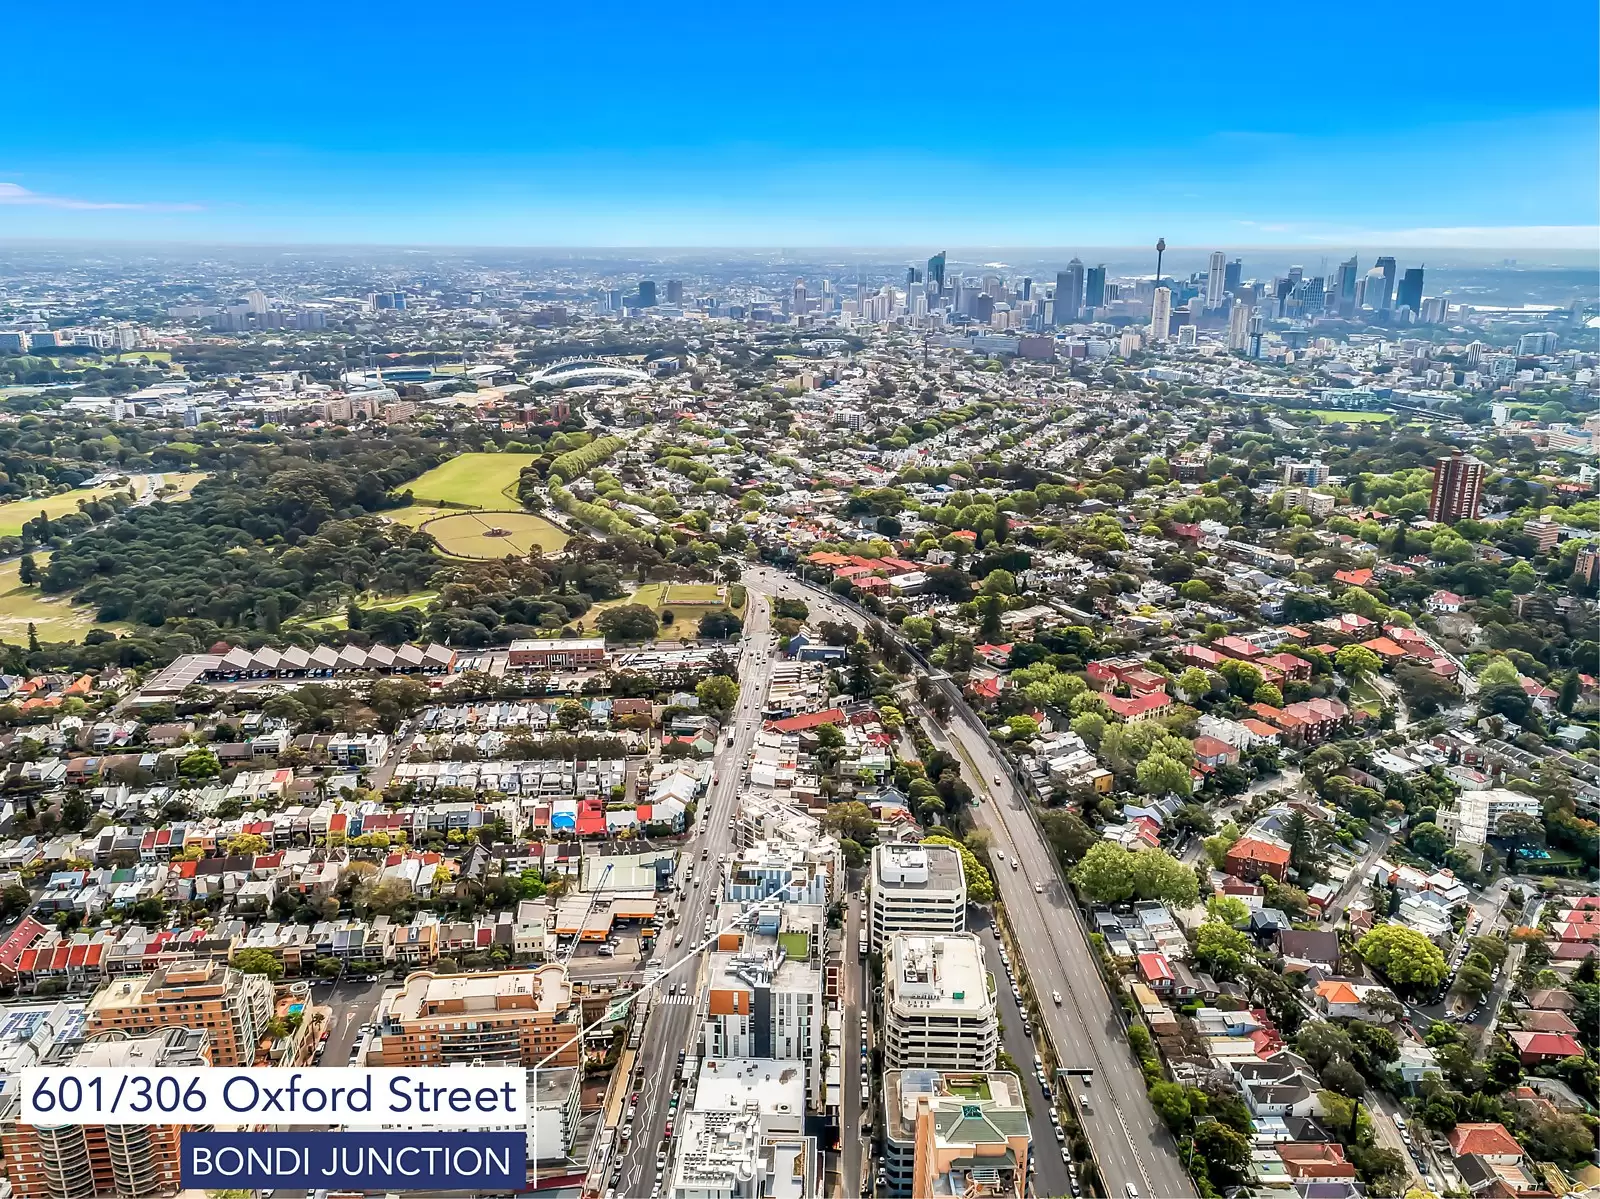 601/306 Oxford Street, Bondi Junction Sold by Sydney Sotheby's International Realty - image 1